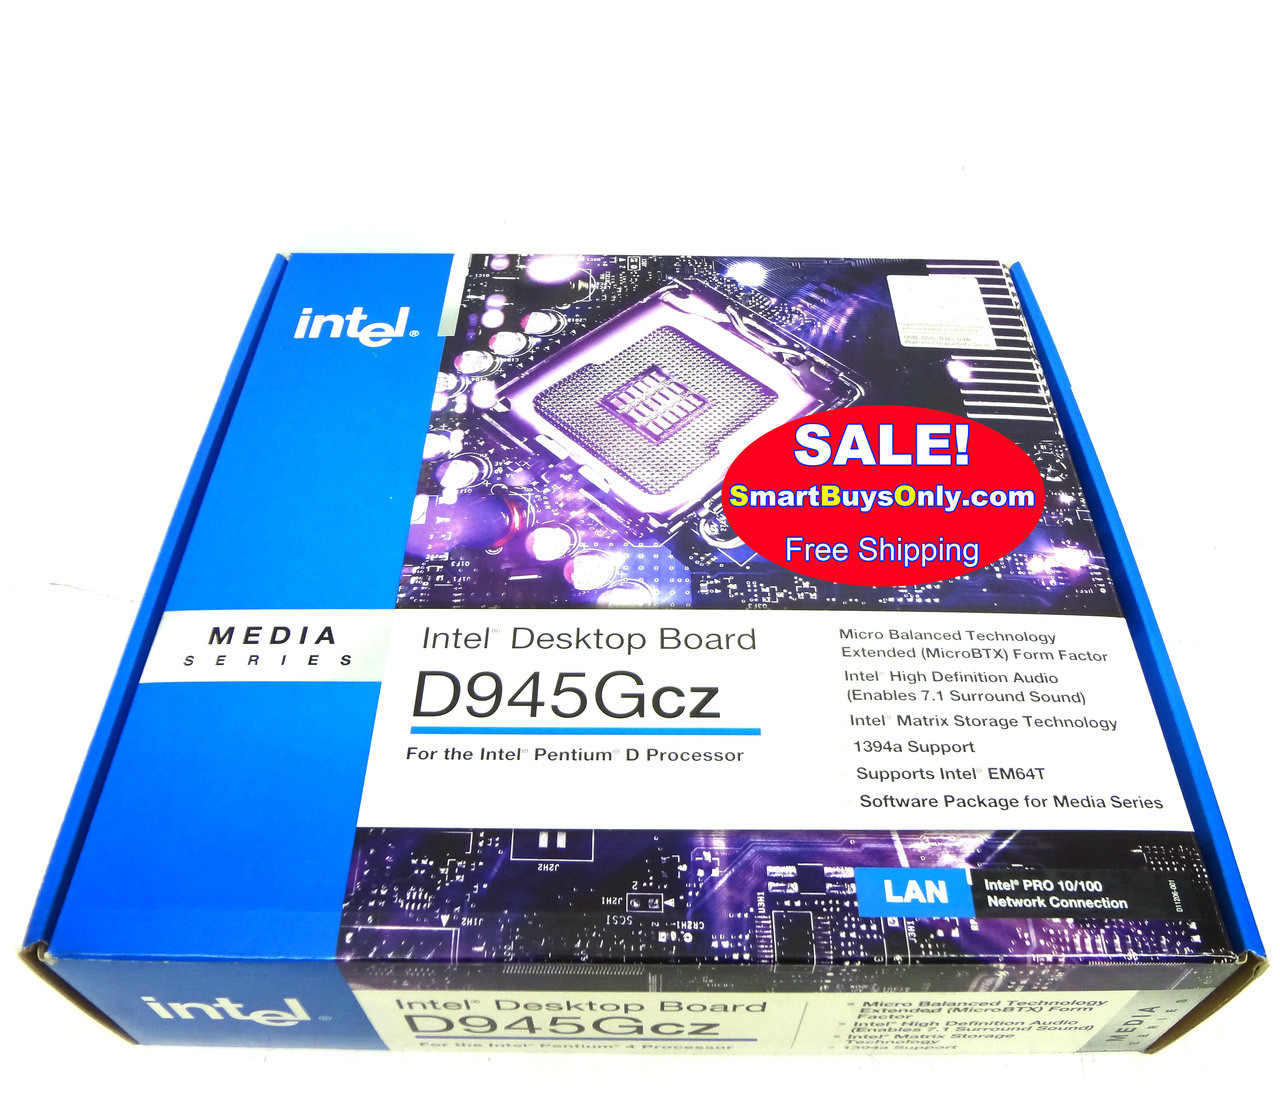 D945Gcz Intel Desktop Motherboard for Pentium D processor